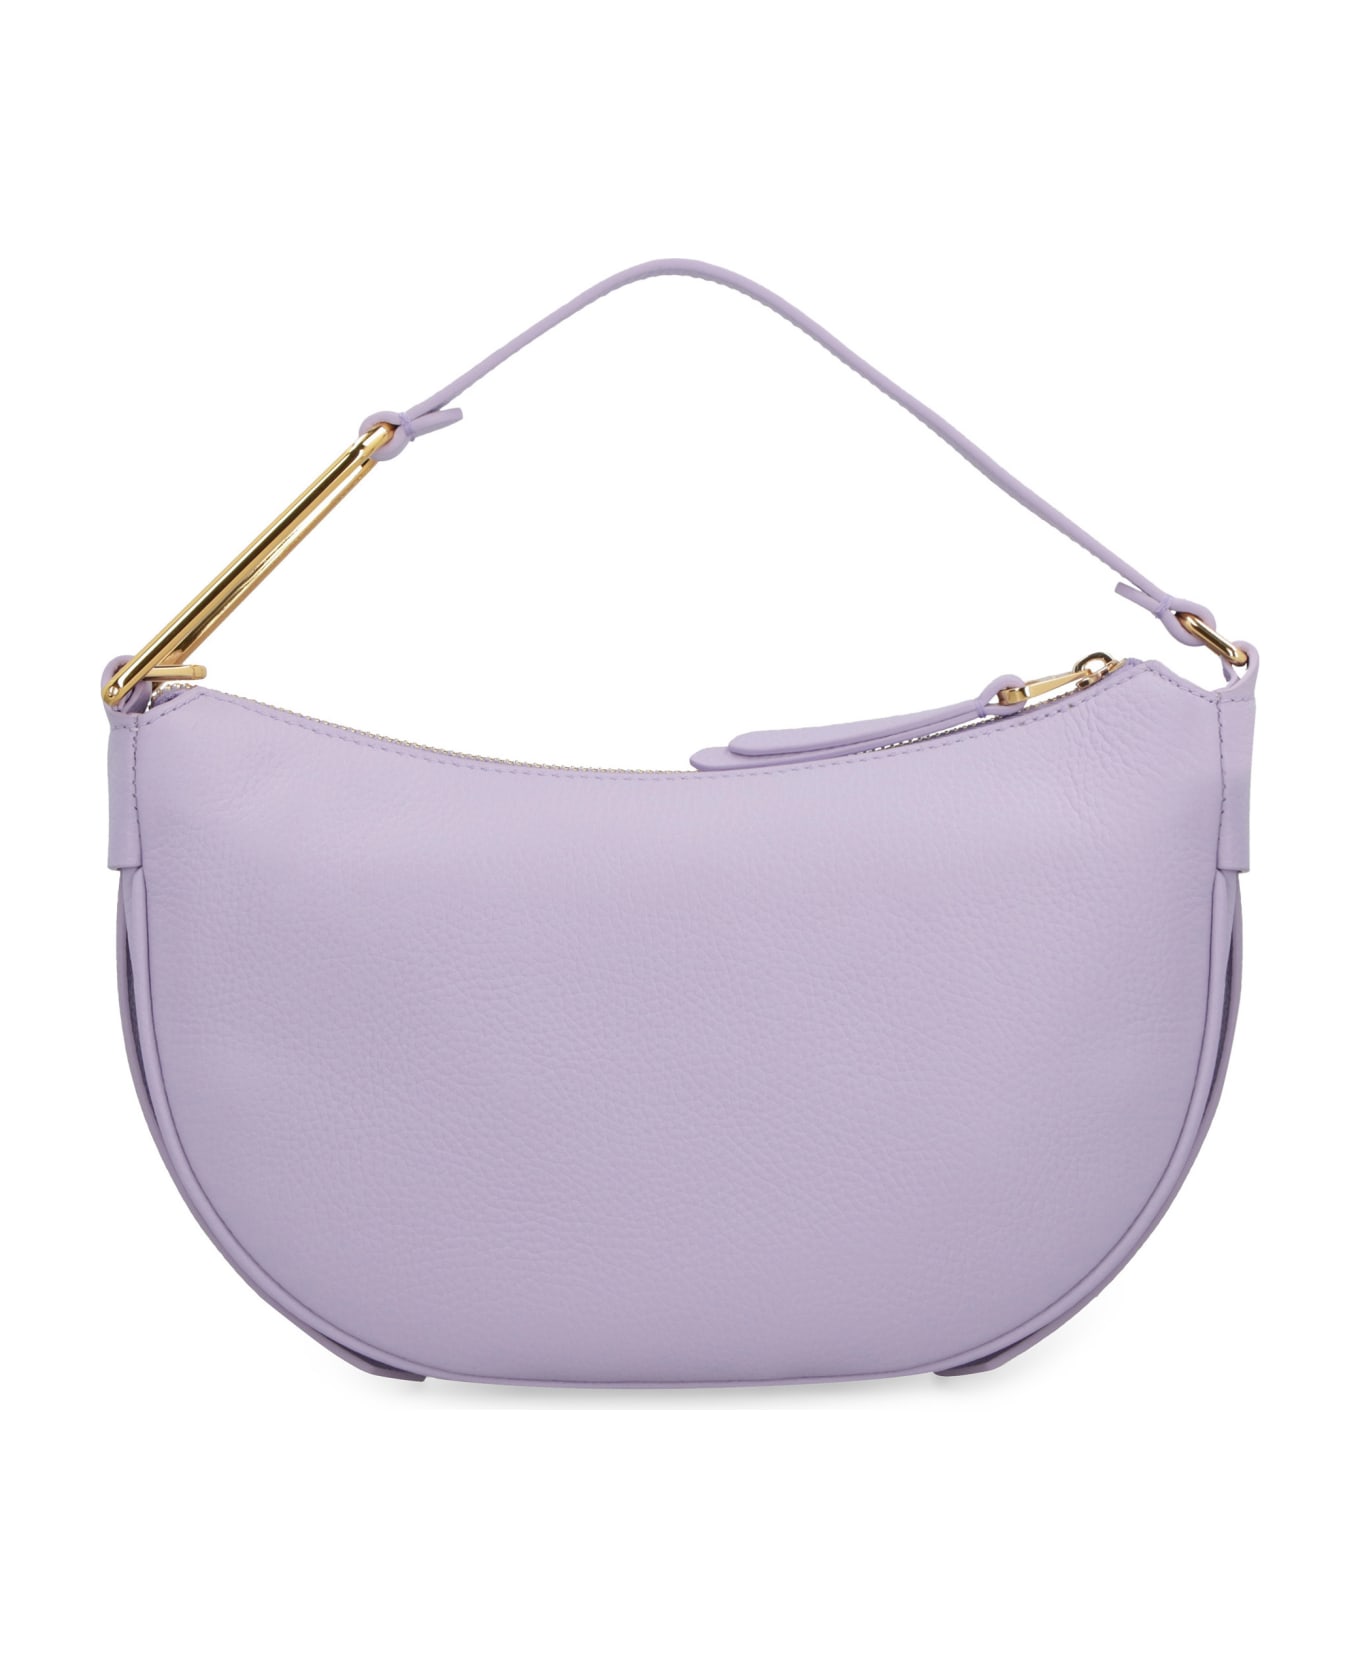 Coccinelle Priscilla Leather Shoulder Bag - Lilac